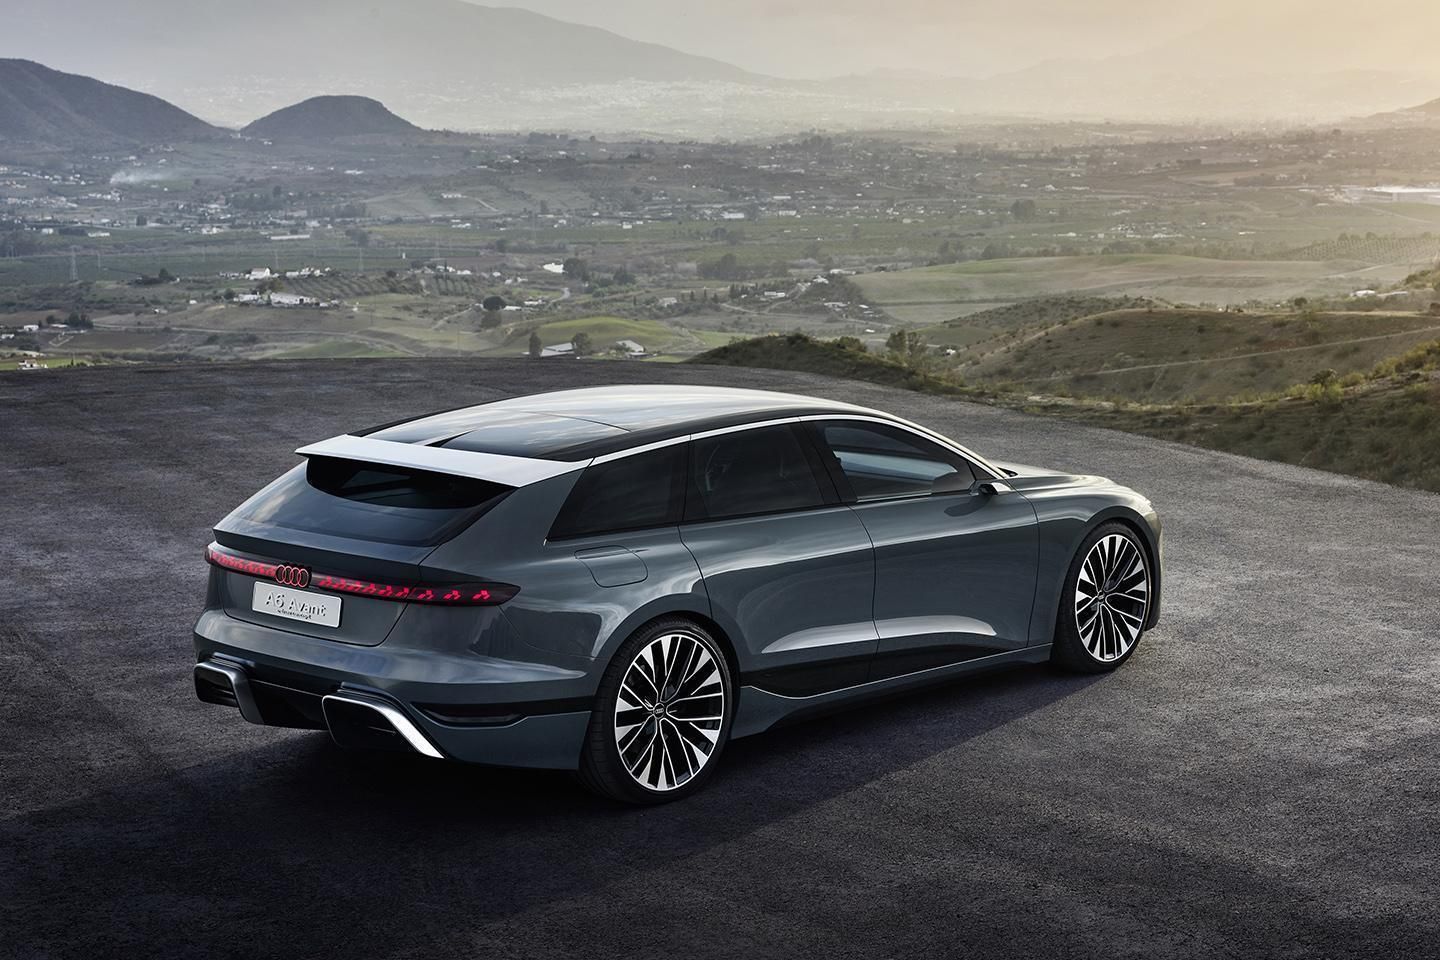 Audi A6 Avant E-Tron Concept First Look: The Drop-Dead Station